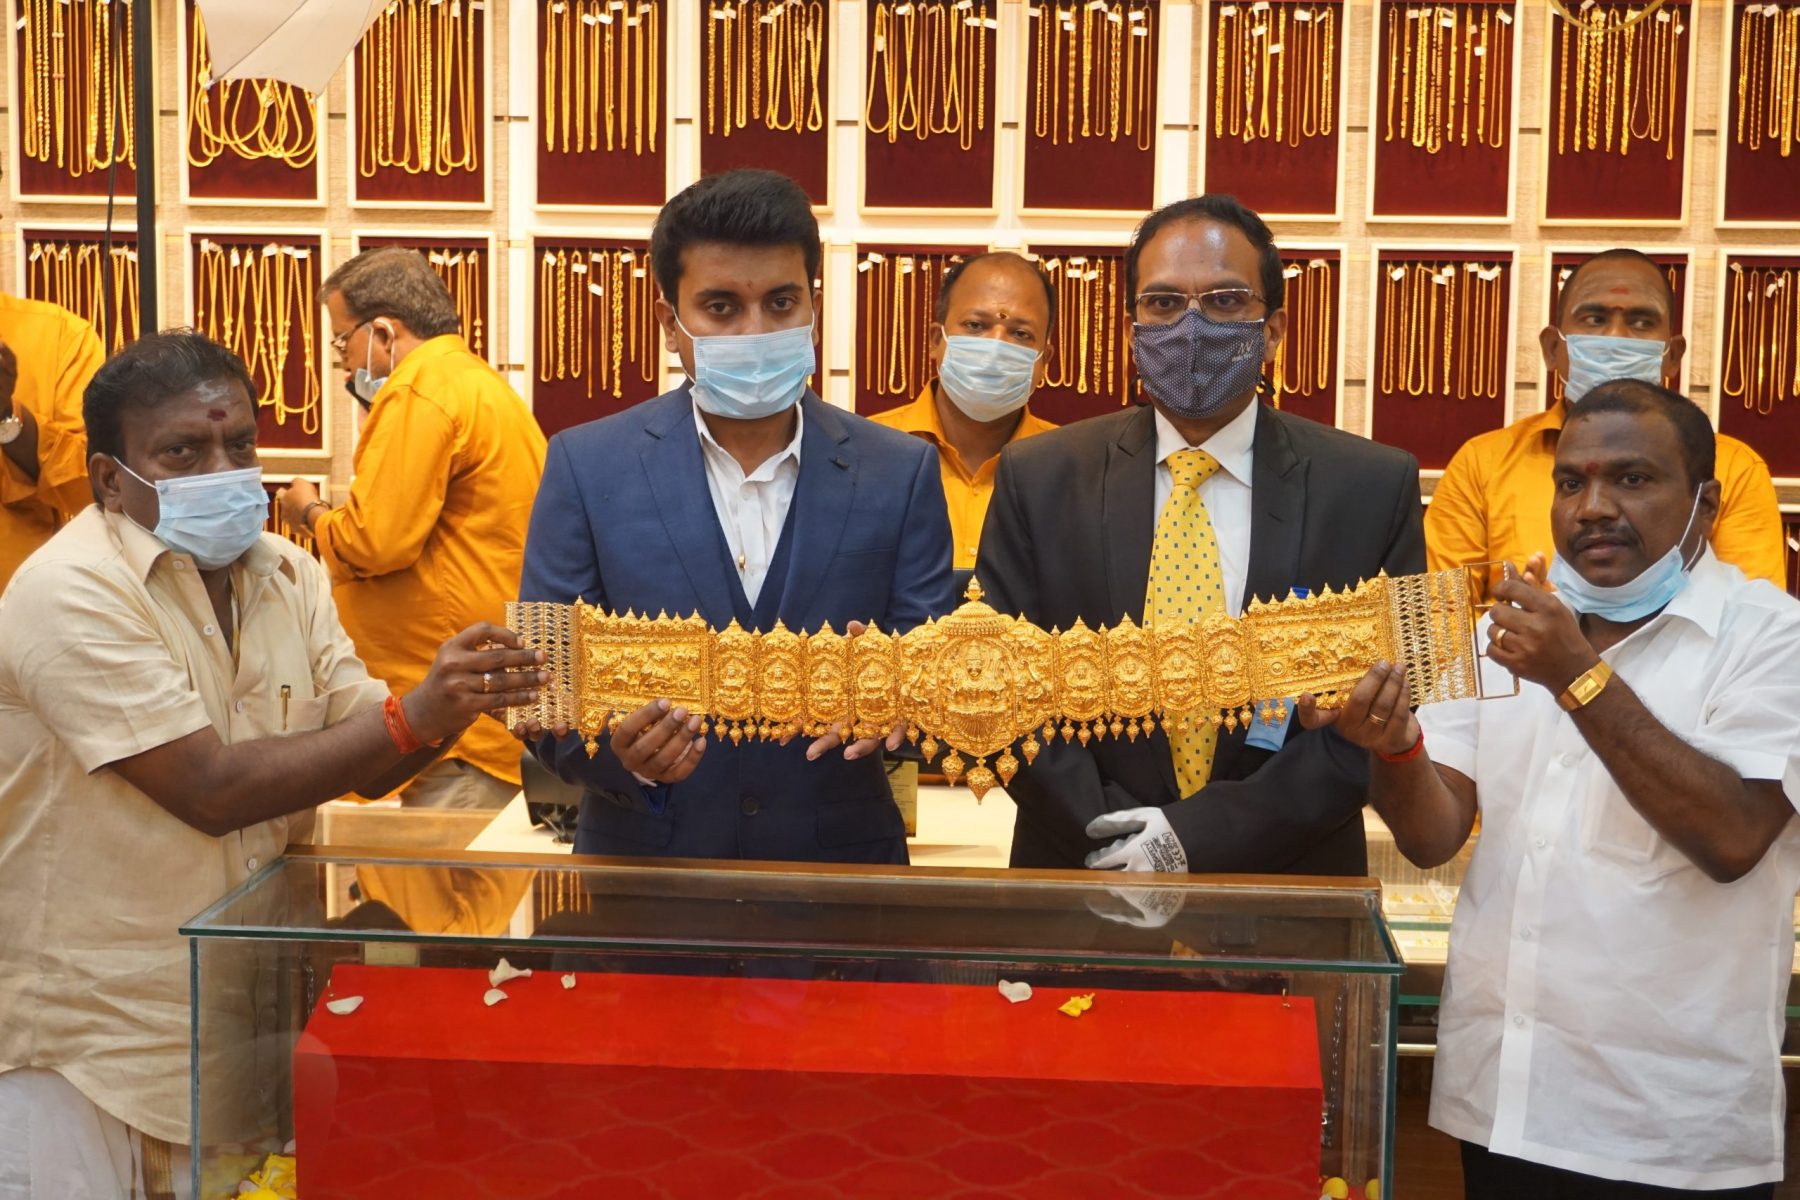 Sri Bhuvanesvari Thangamaligai in Tamil Nadu Creates a New World Record by making the World’s Largest Gold Girdle - Digpu News